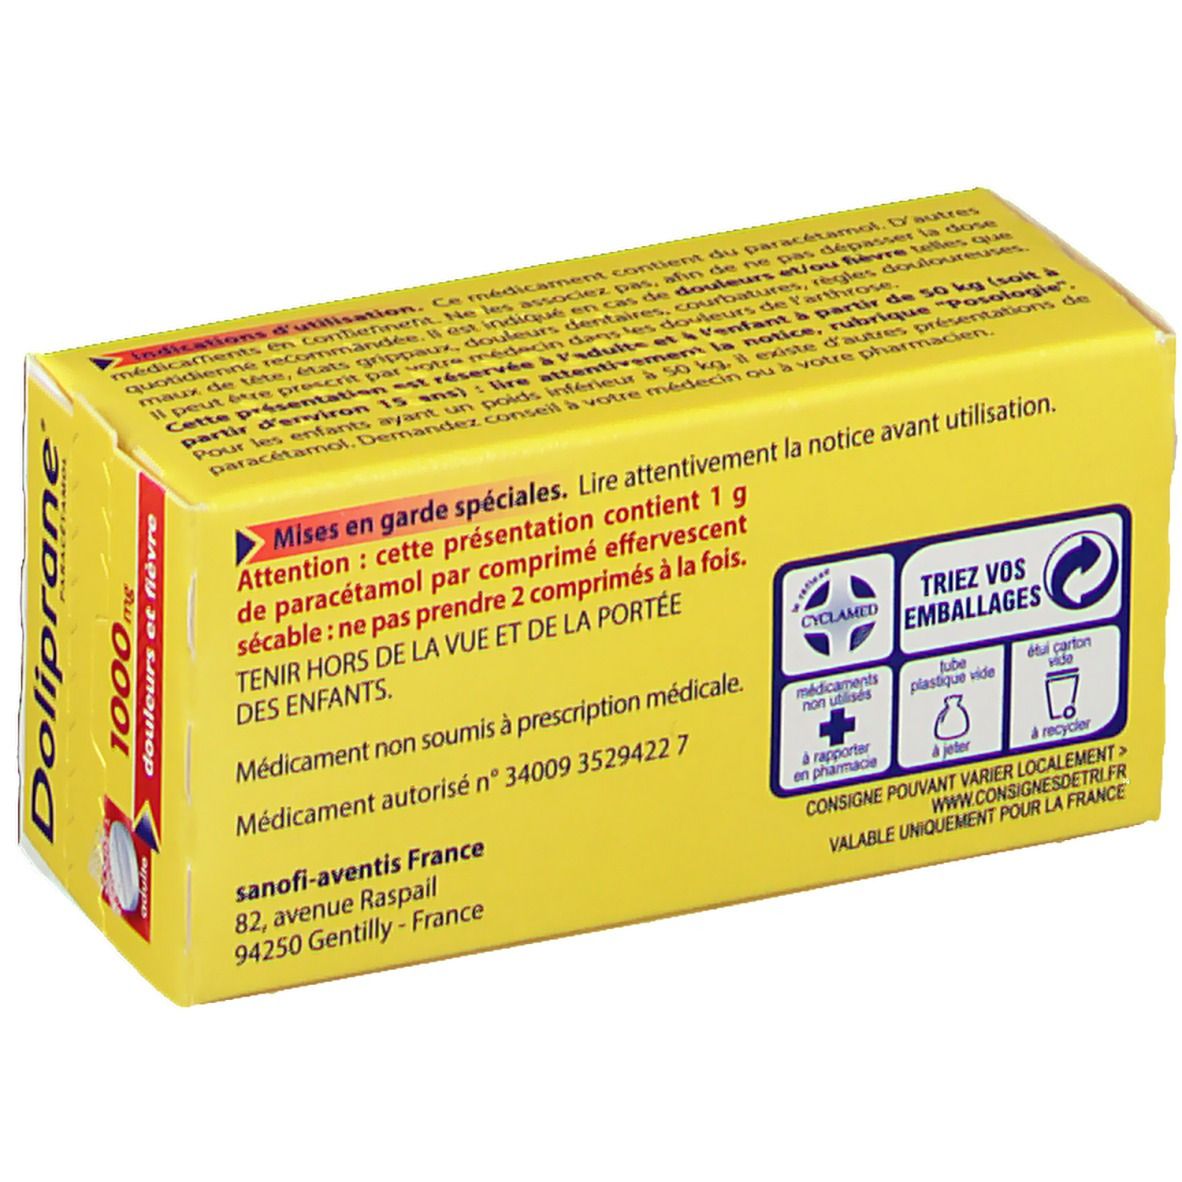 Doliprane comprimé effervescent 1000 mg - Pharmacie de la Maourine